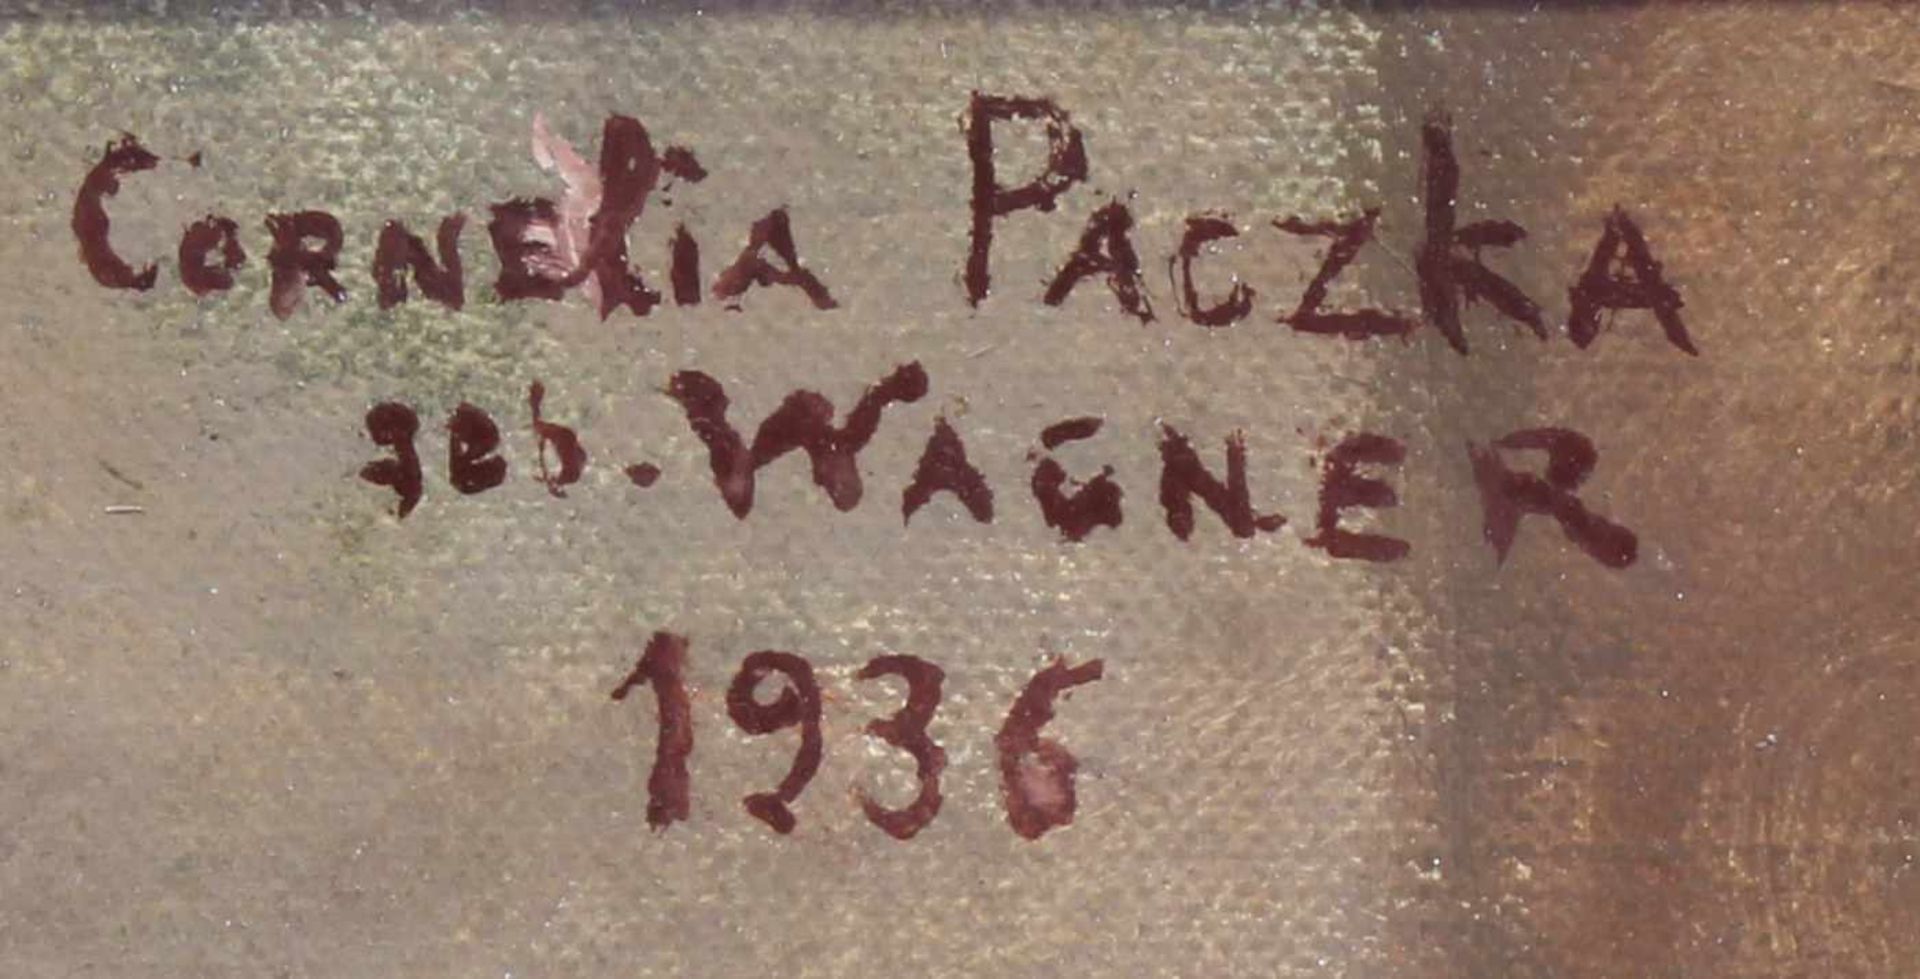 Paczka, Cornelia (1864 Göttingen - ca. 1930, studierte in Berlin bei K. Stauffer-Bern und in München - Image 5 of 8